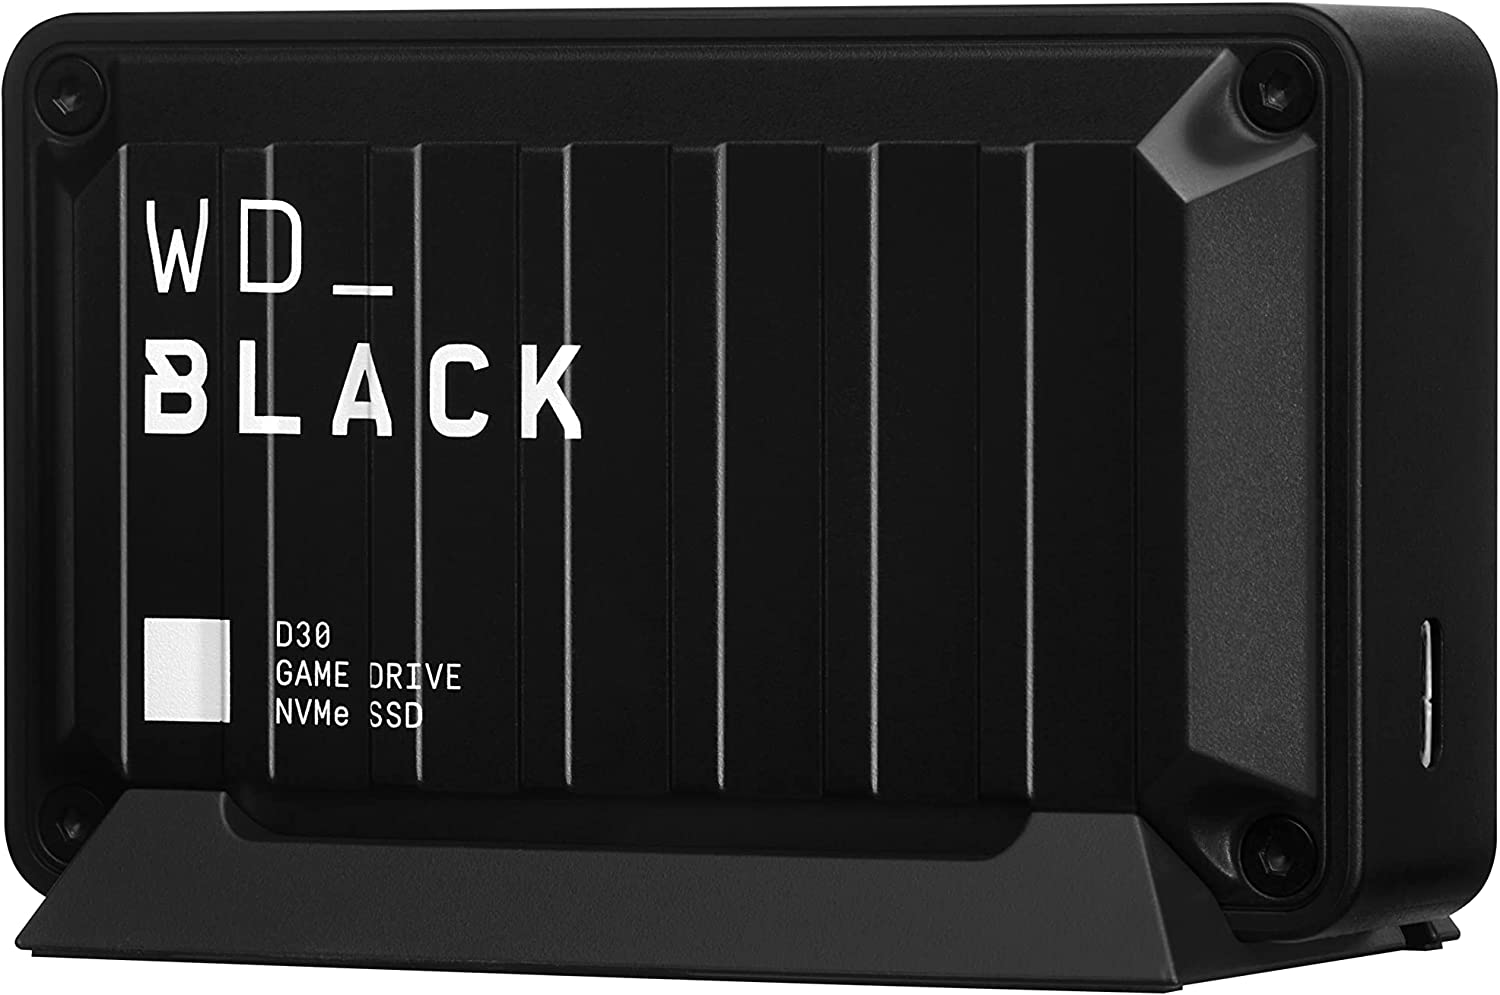 WD_BLACK D30 Portable External Xbox SSD, 1 TB